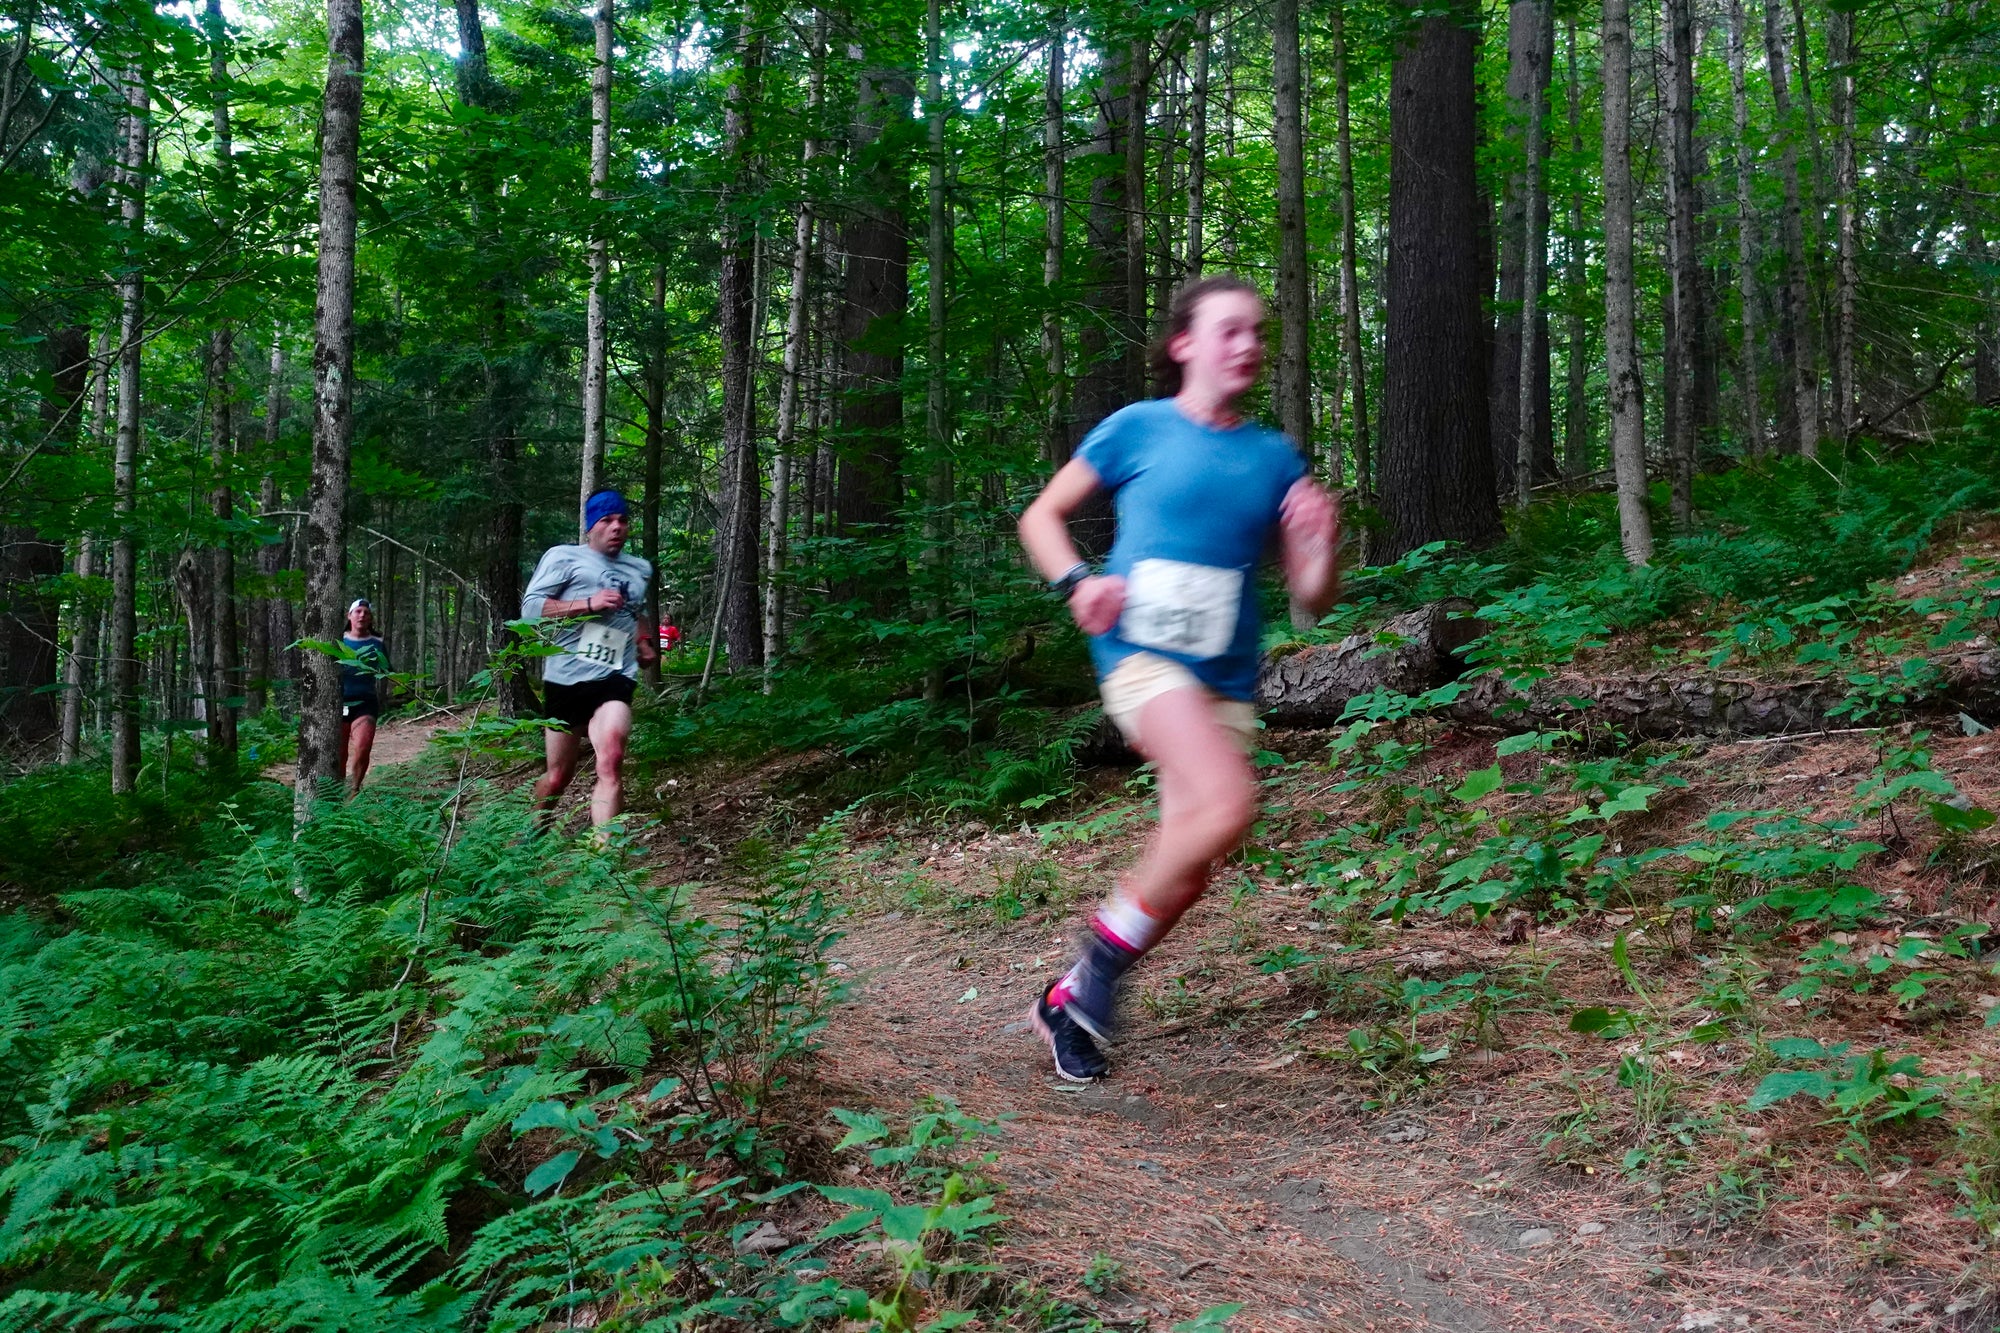 A runner in a blue shirt racing a trail race through lush green woods